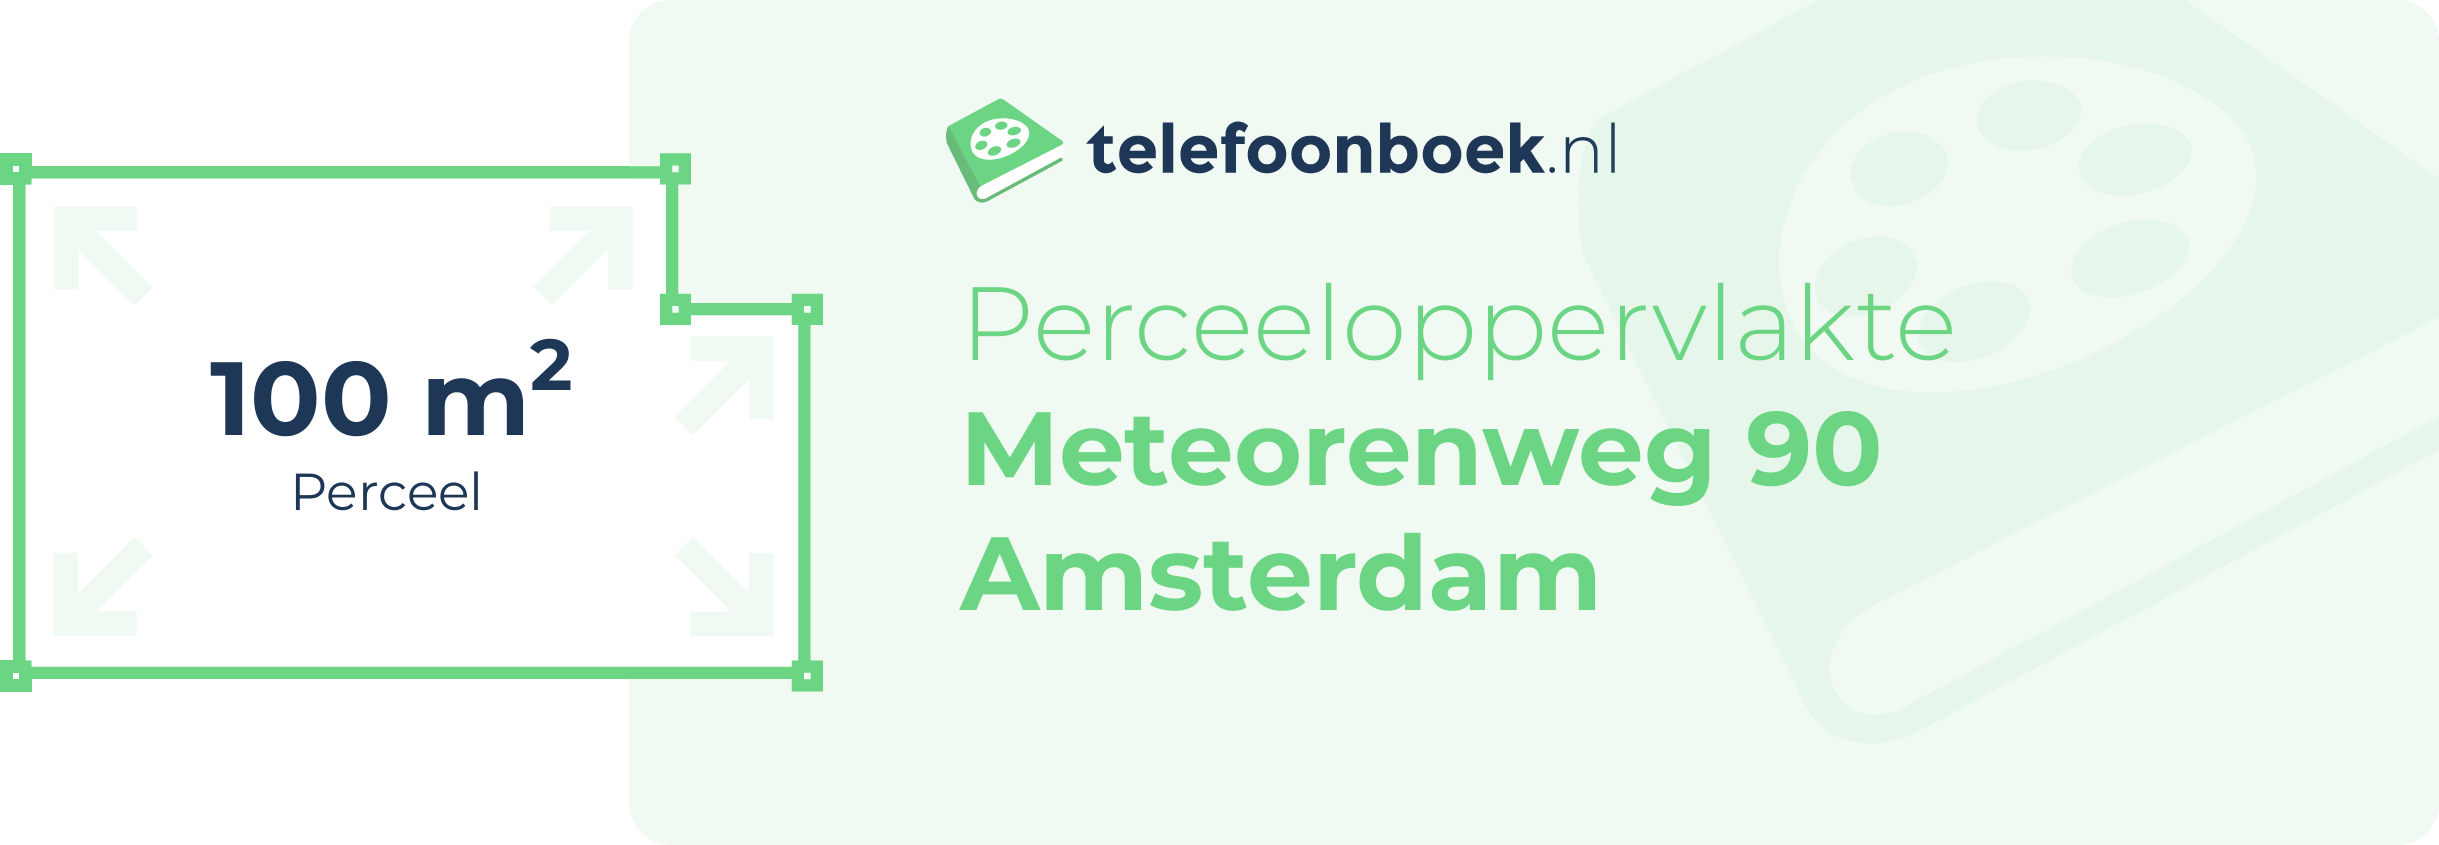 Perceeloppervlakte Meteorenweg 90 Amsterdam